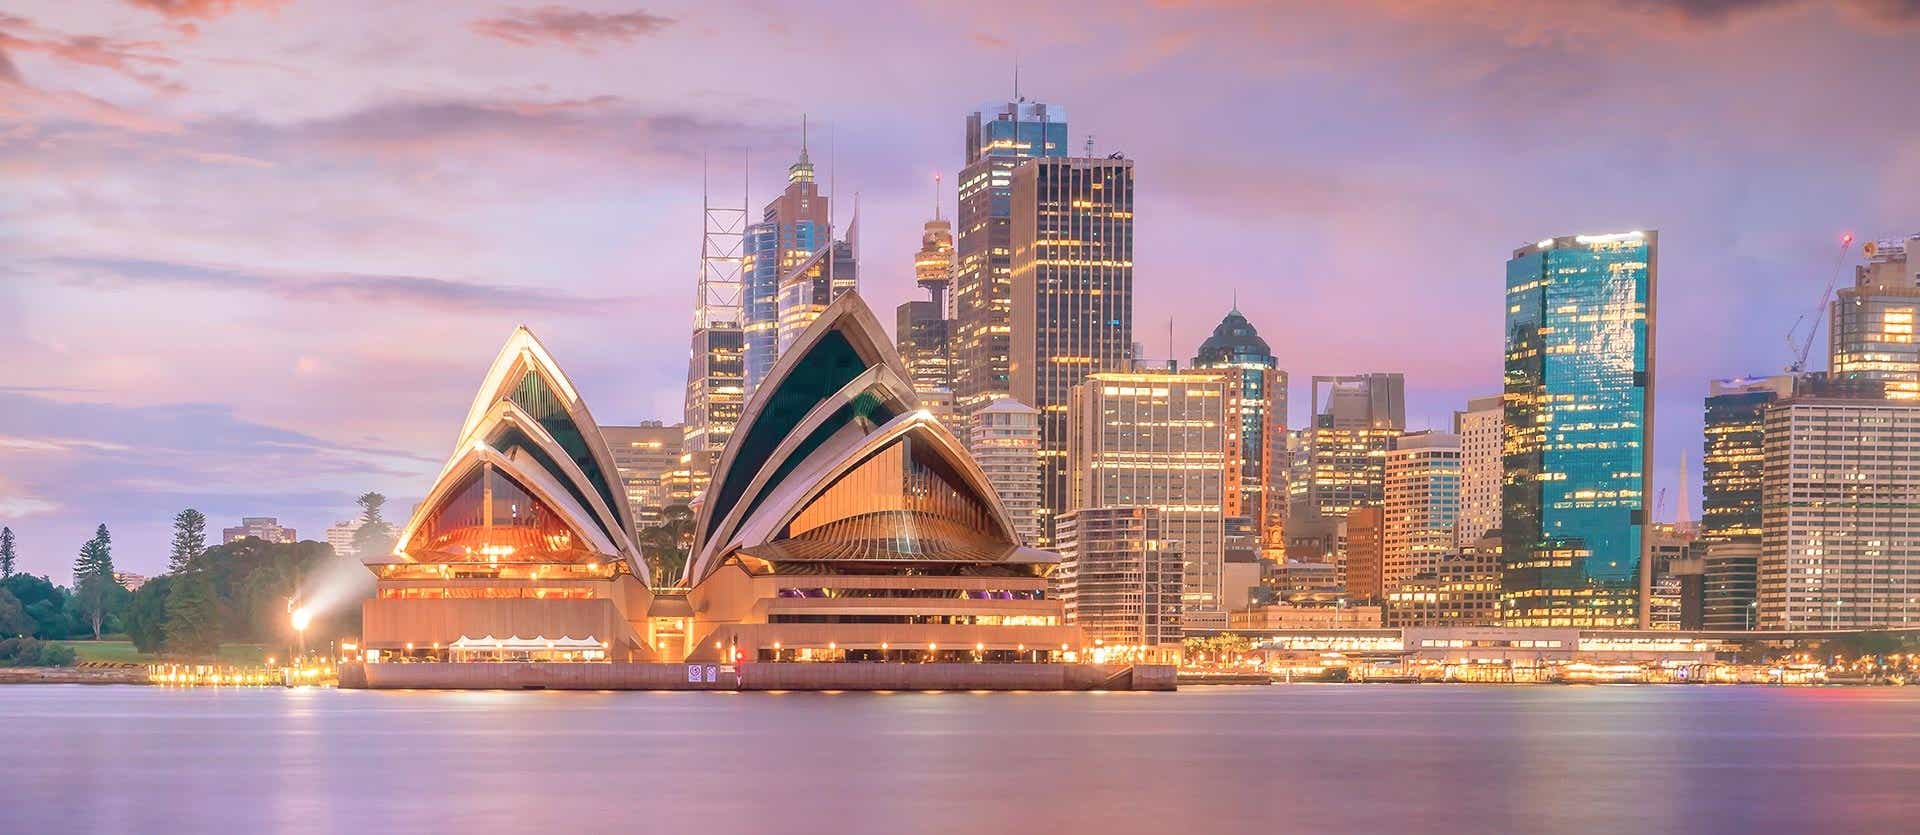 Opera House <span class="iconos separador"></span> Sydney